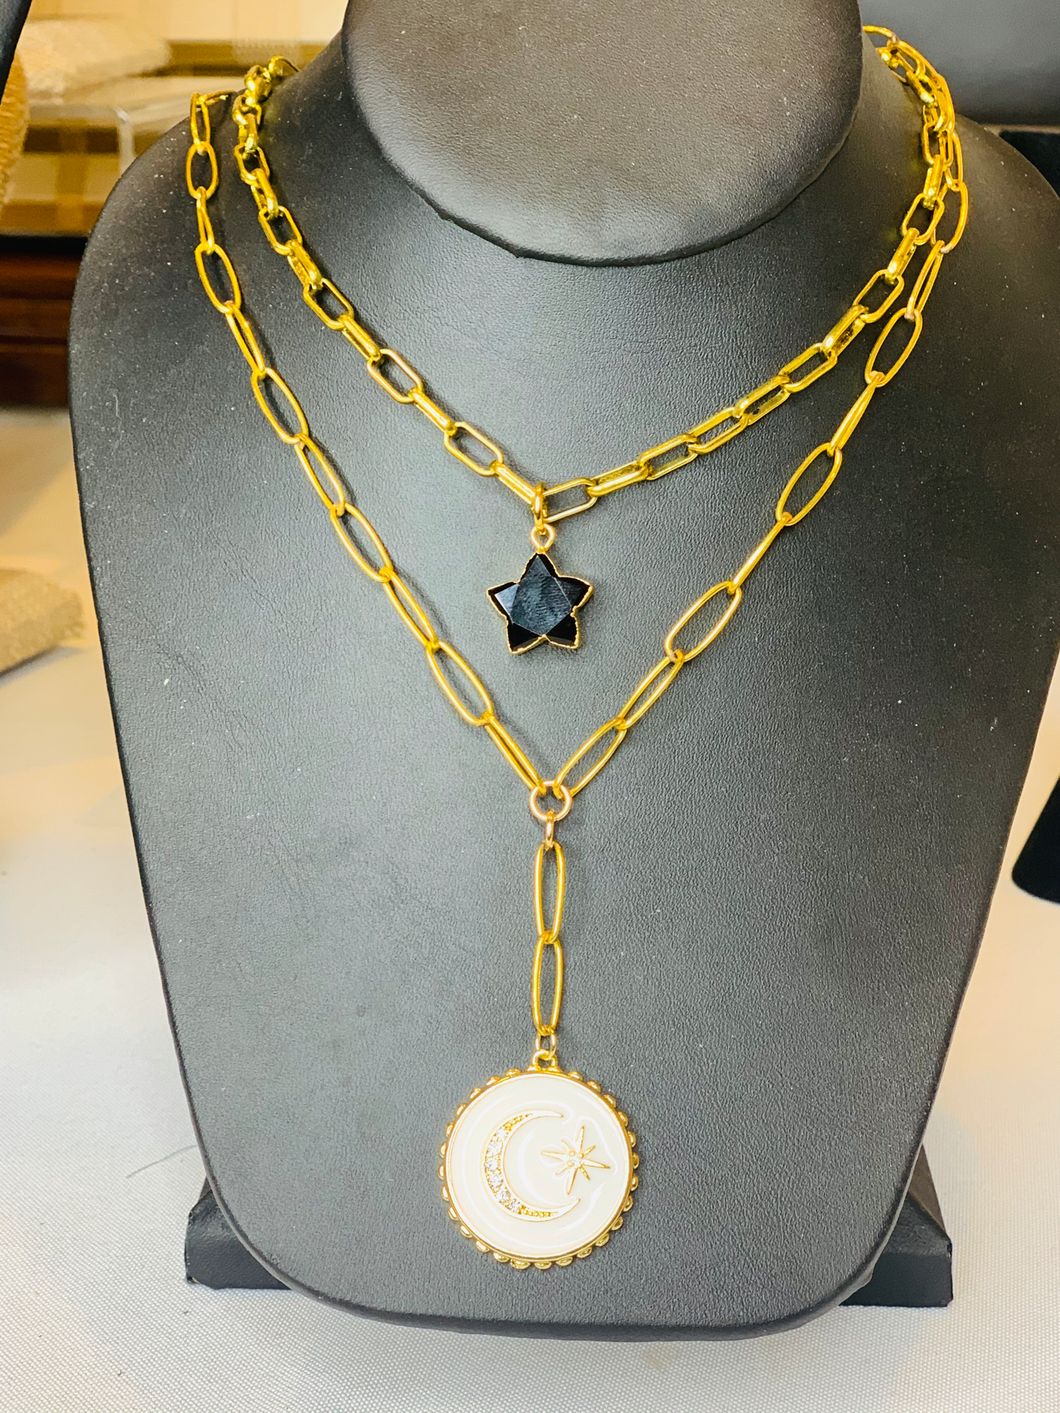 White moon enamel pendant on gold link chain.